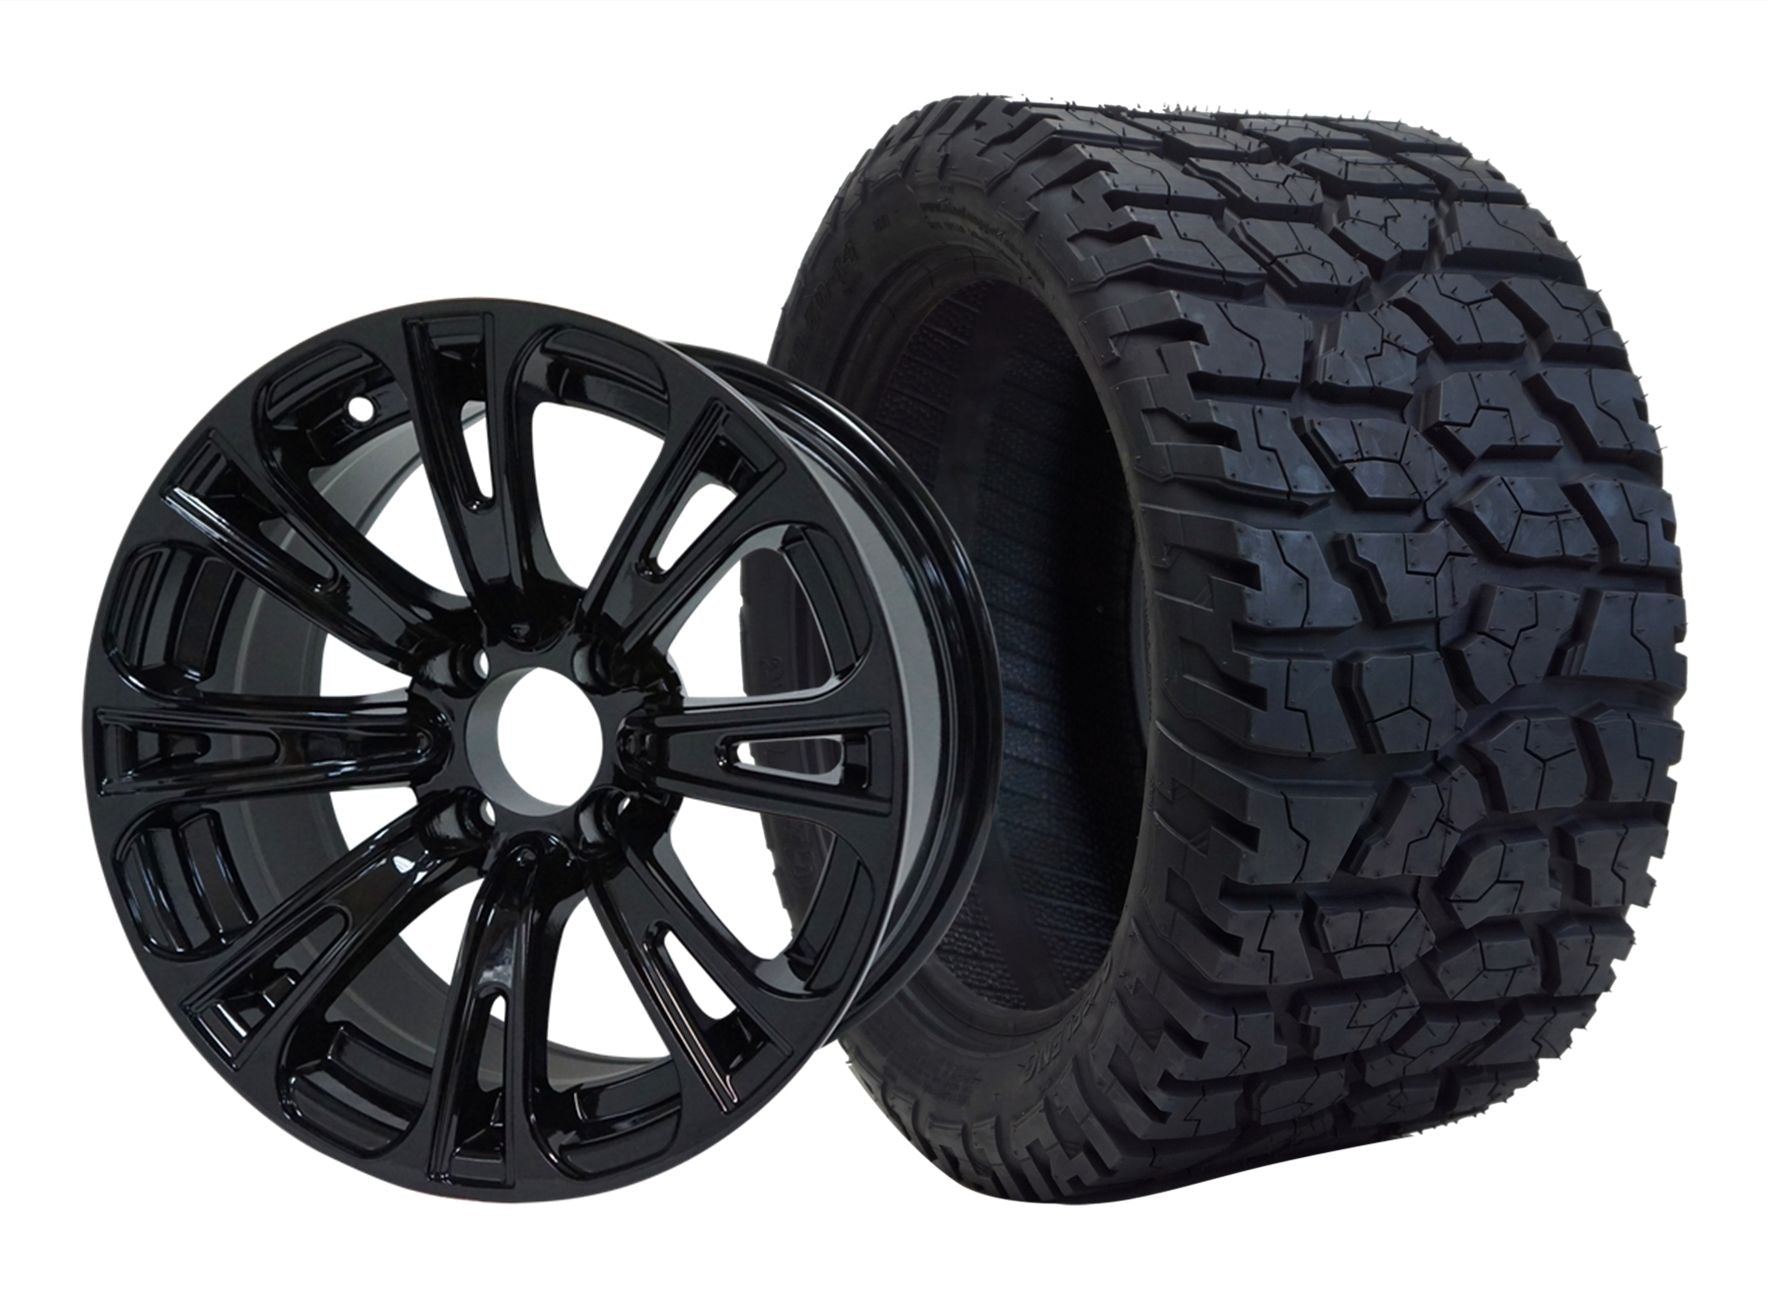 SGC 14" x 7" Voodoo Glossy Black Wheel - Aluminum AlloySTEELENG 22"x10.5"-14" GATOR All Terrain Tire DOT Approved WH1421-TR1401